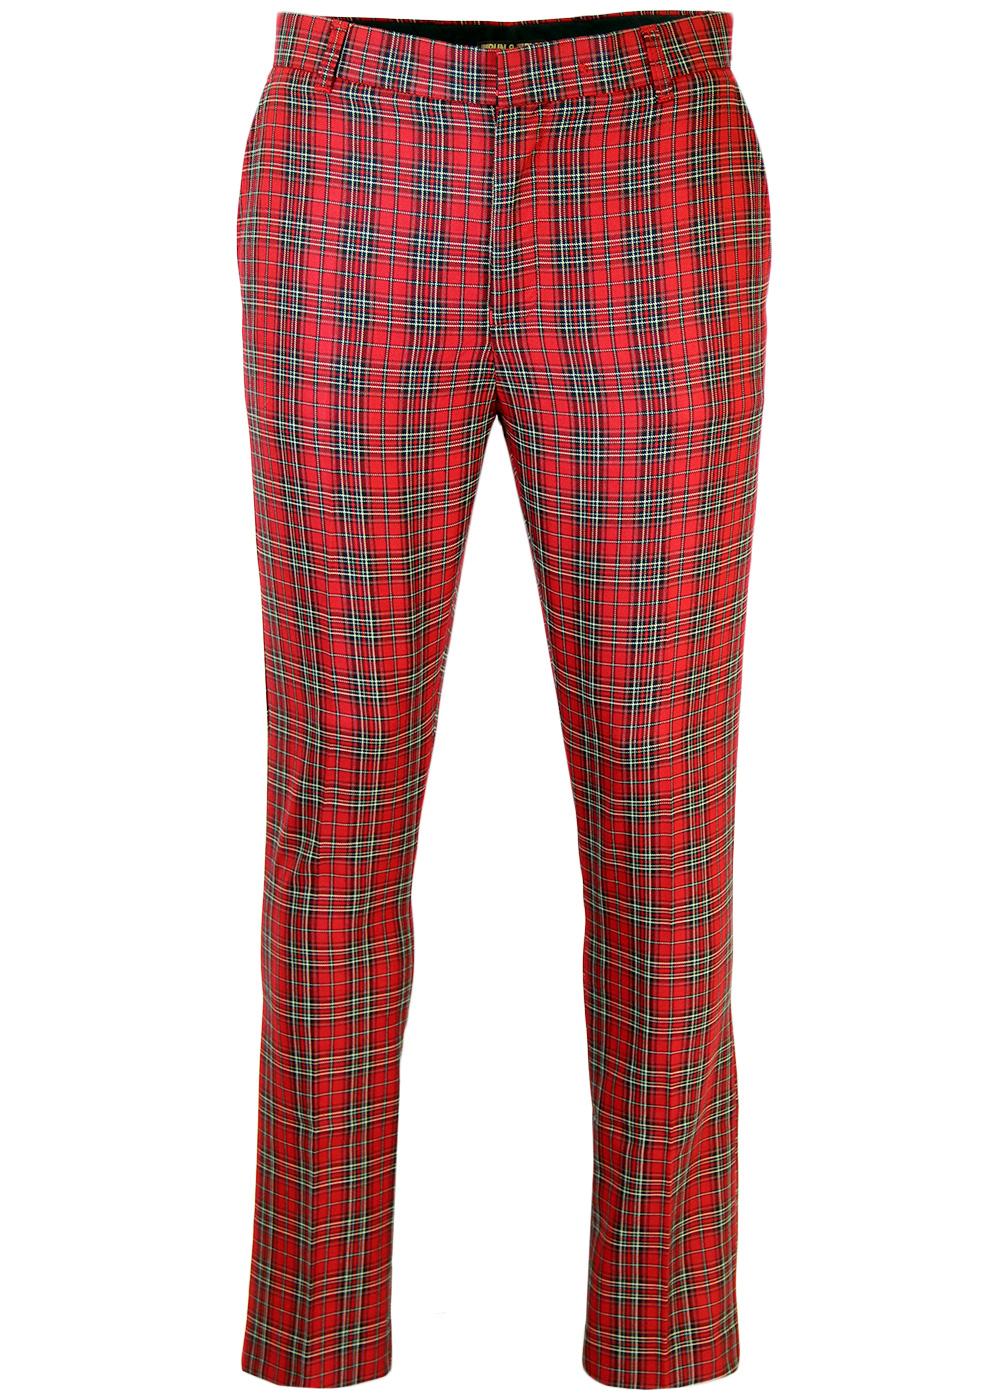 Retro Mod Sixties Slim Fit Stewart Tartan Trousers in Red